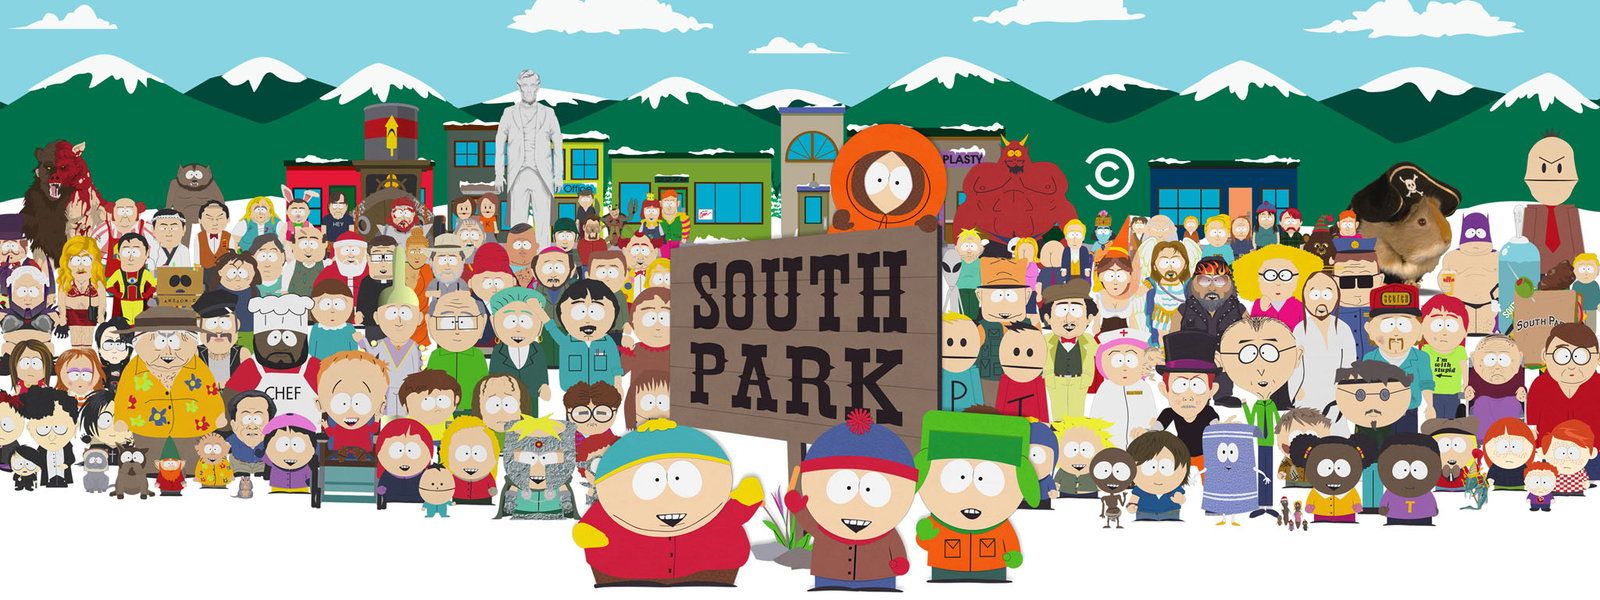 south park episode 201 uncensored speach